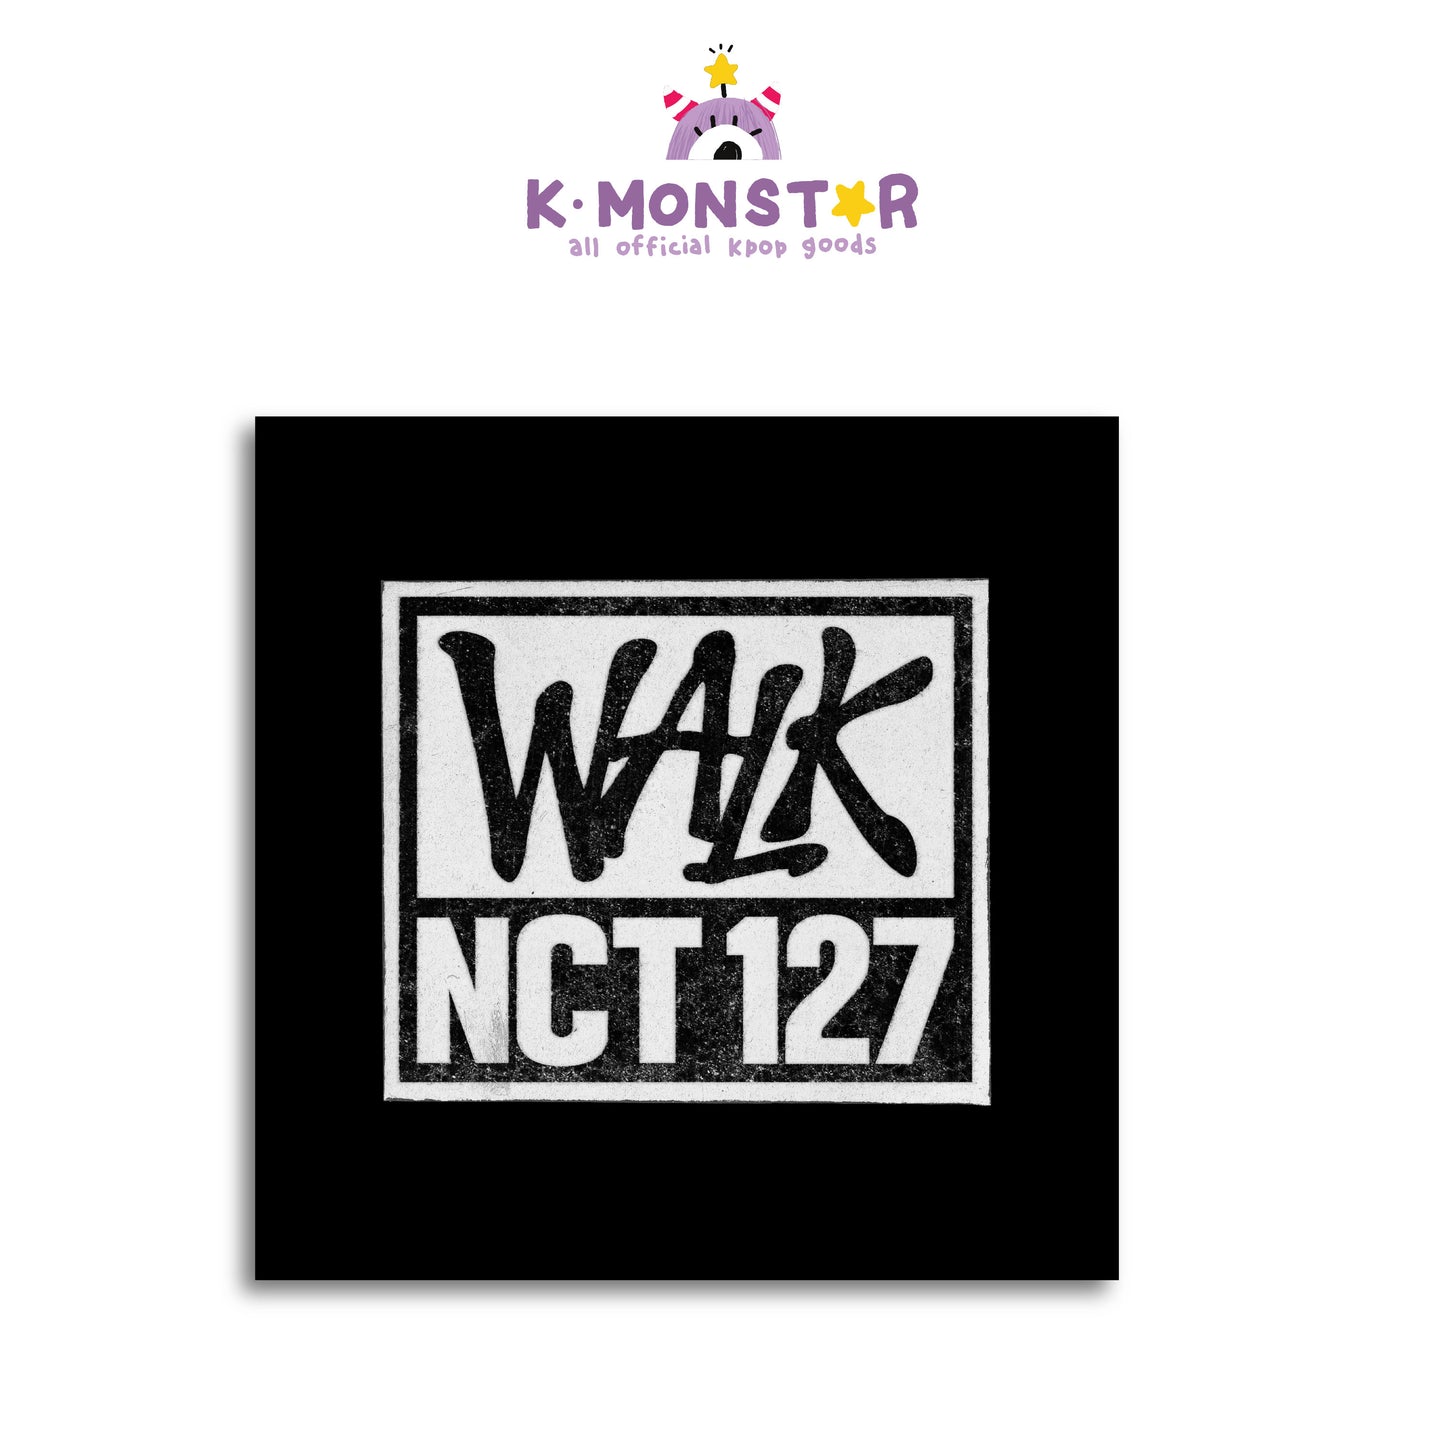 NCT 127 | The 6th Album | WALK (Podcast Ver.)